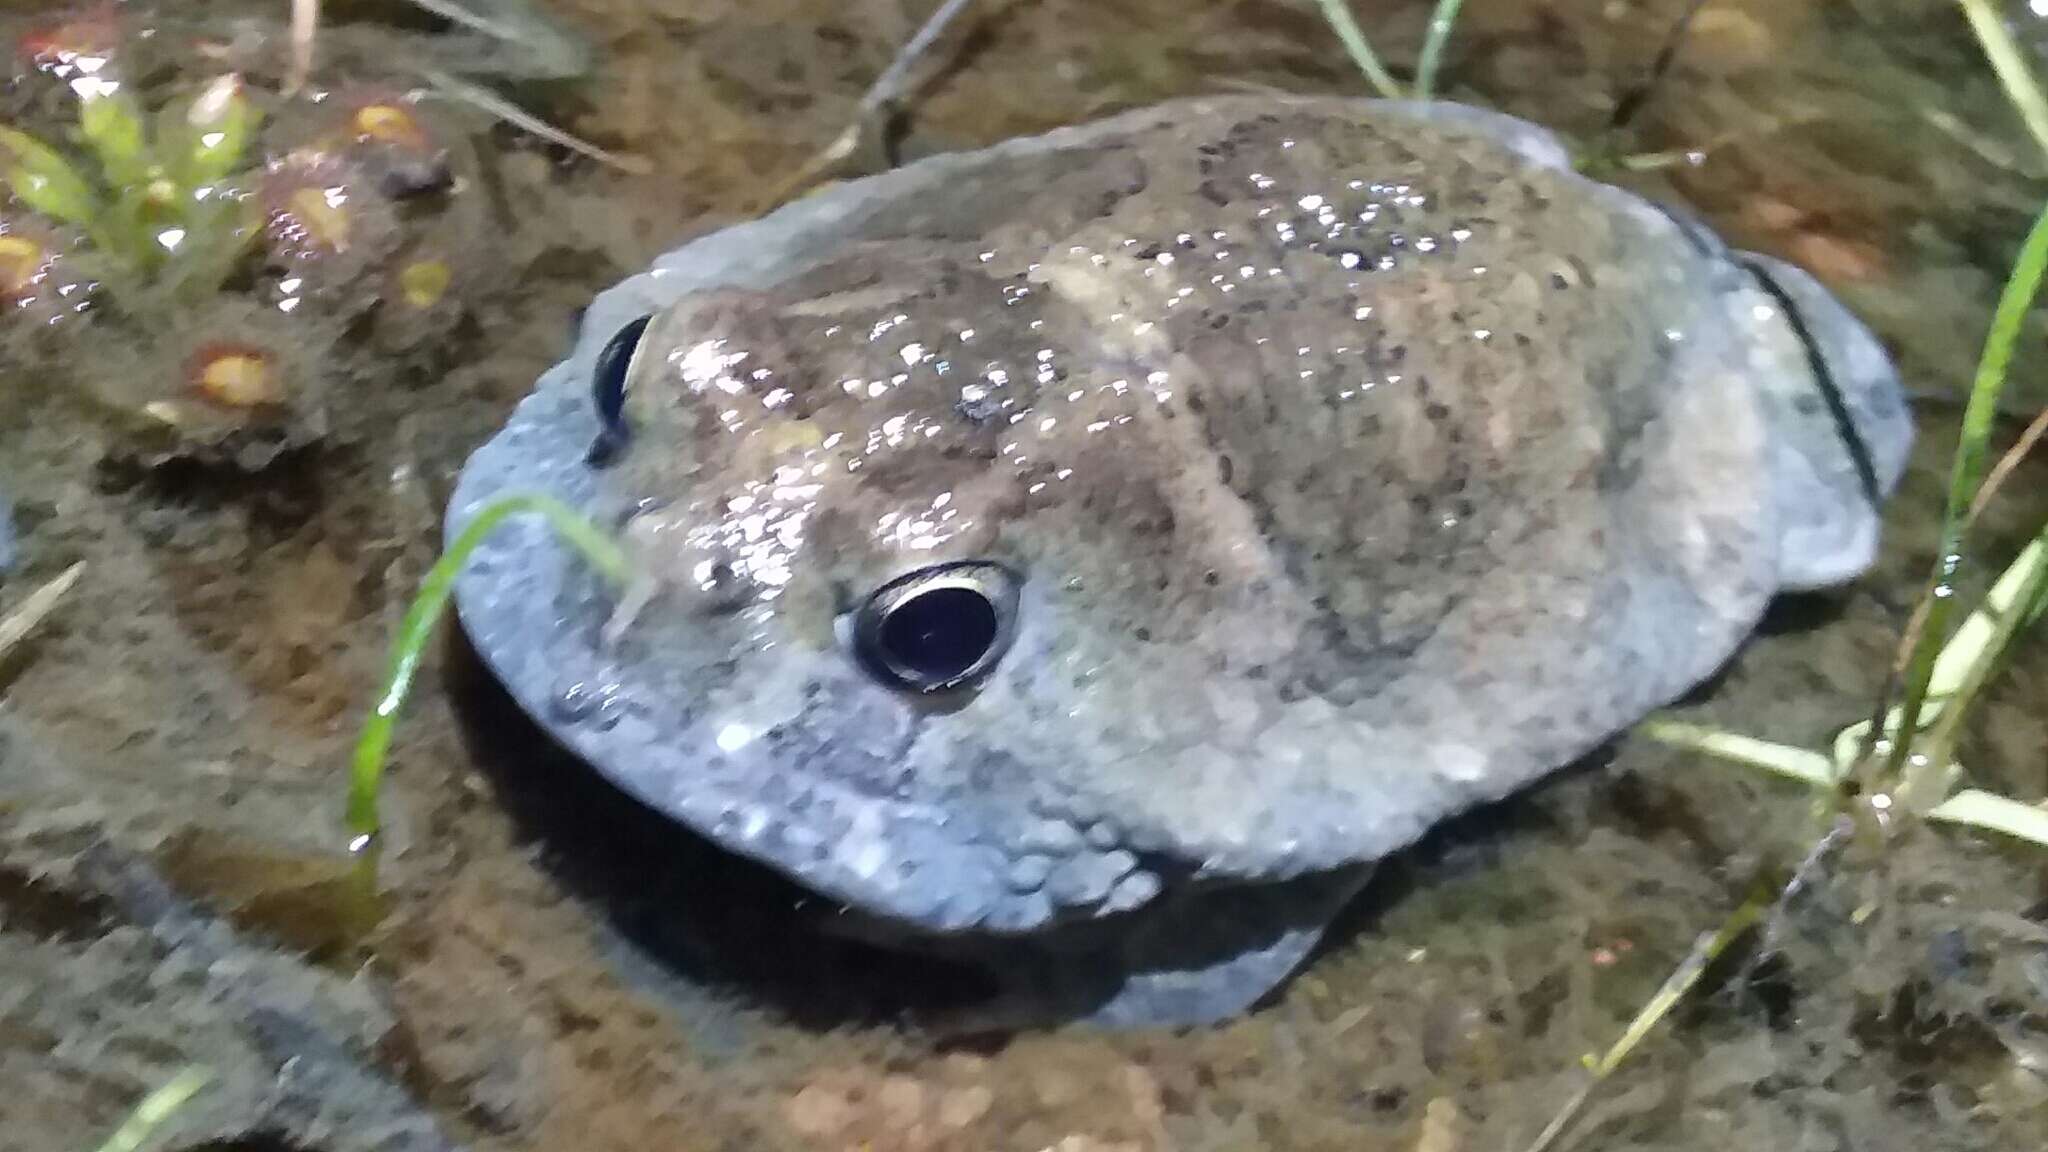 Image of Northern Spadefoot Toad